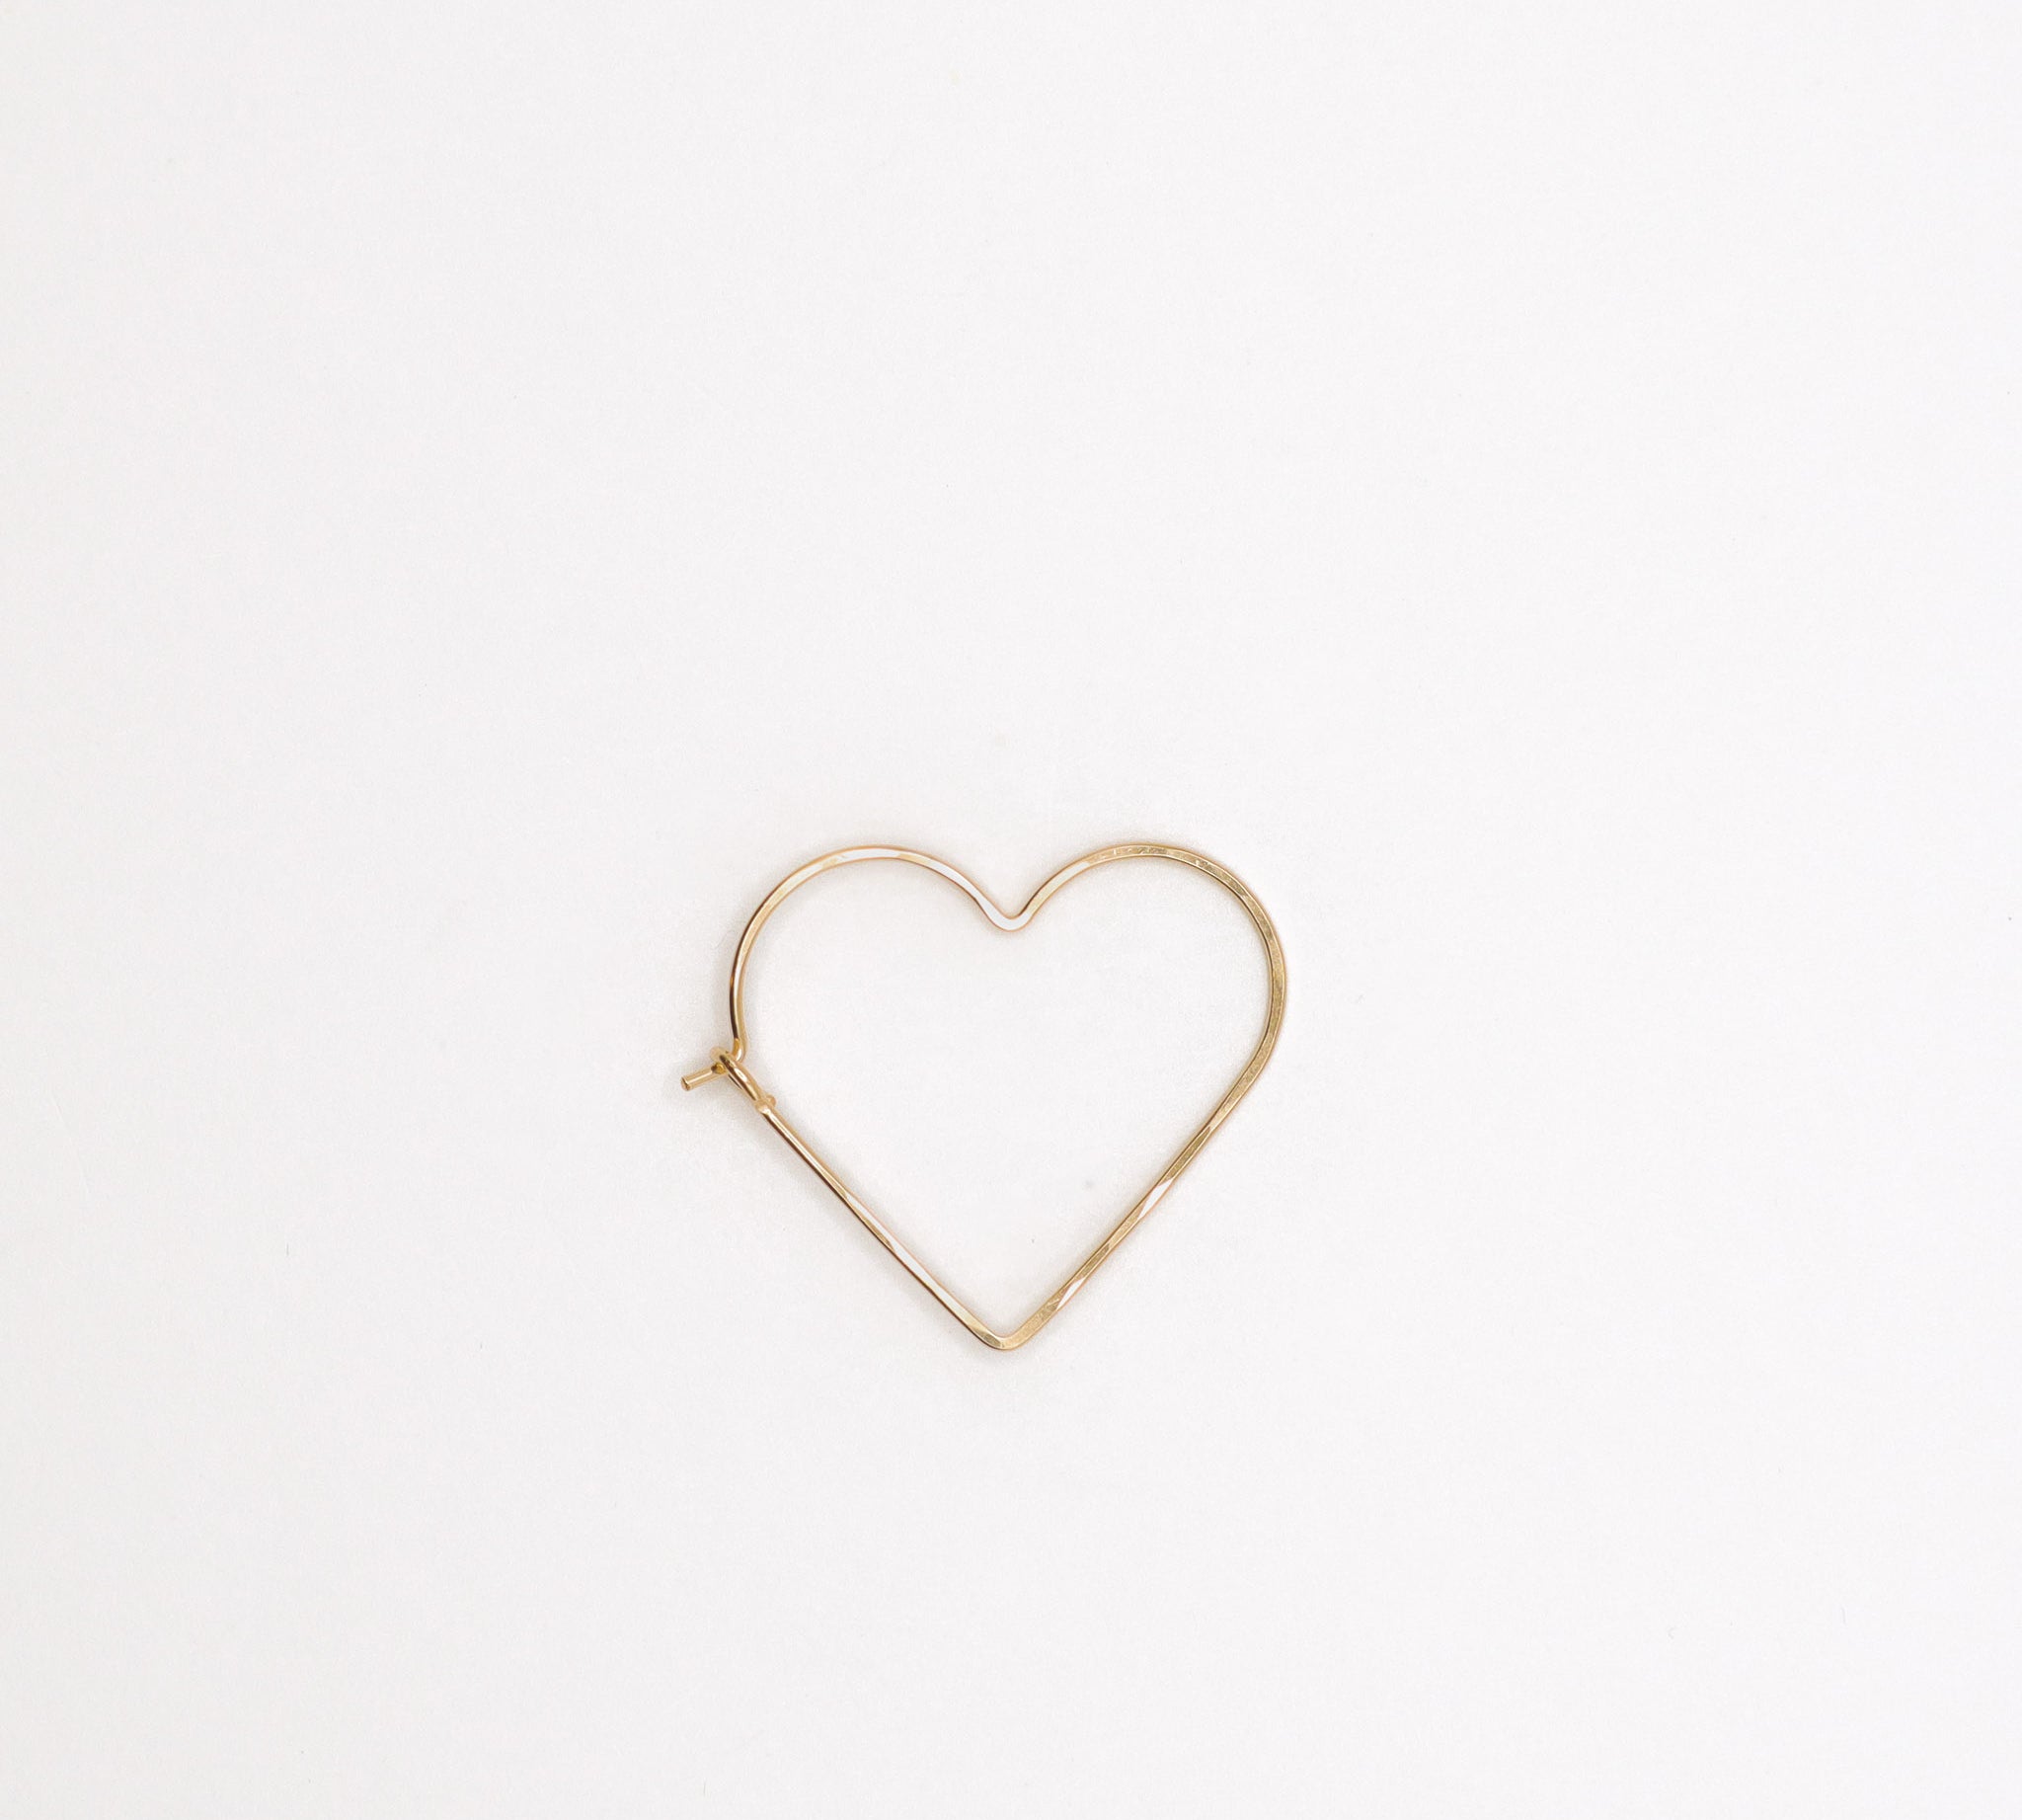 Single Gold Petite Heart Hoop Earring, featured image